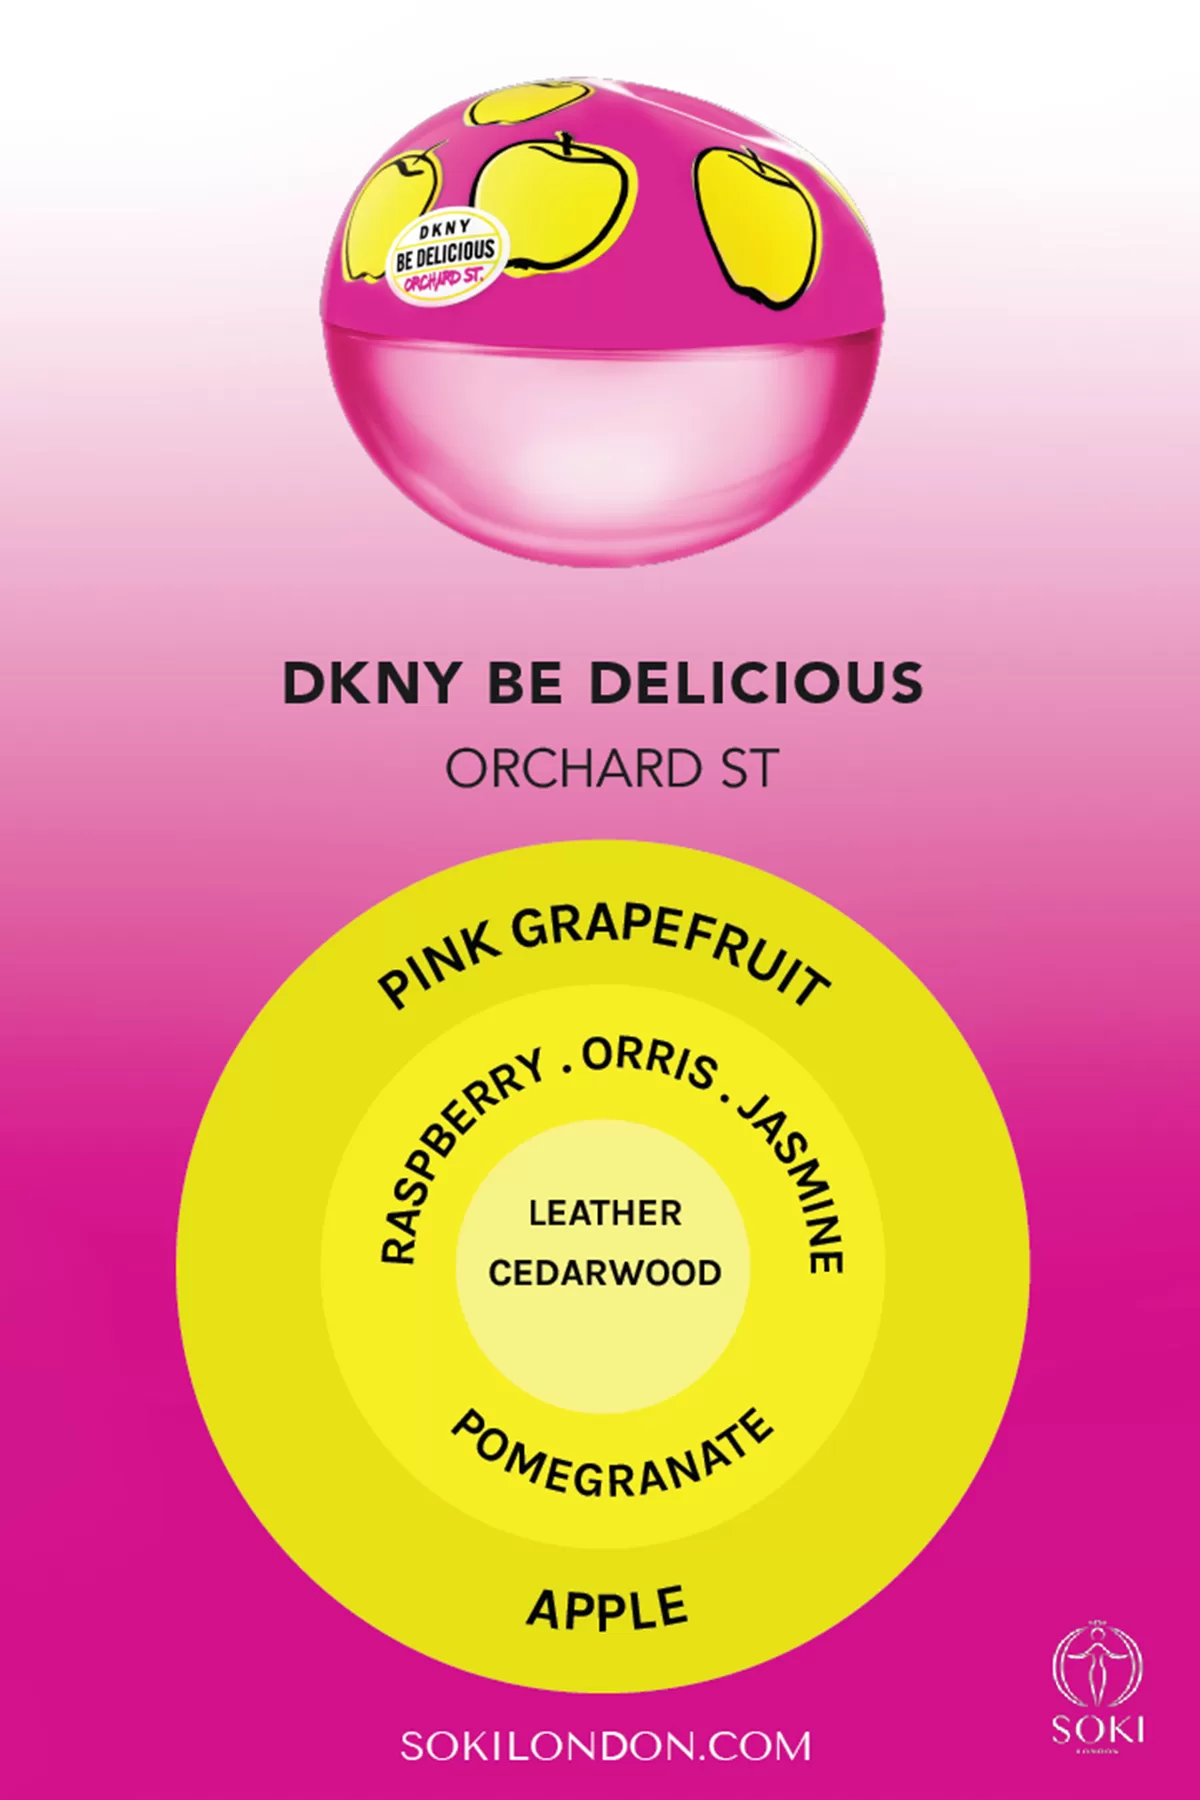 DKNY Be Delicious ถนนออร์ชาร์ด